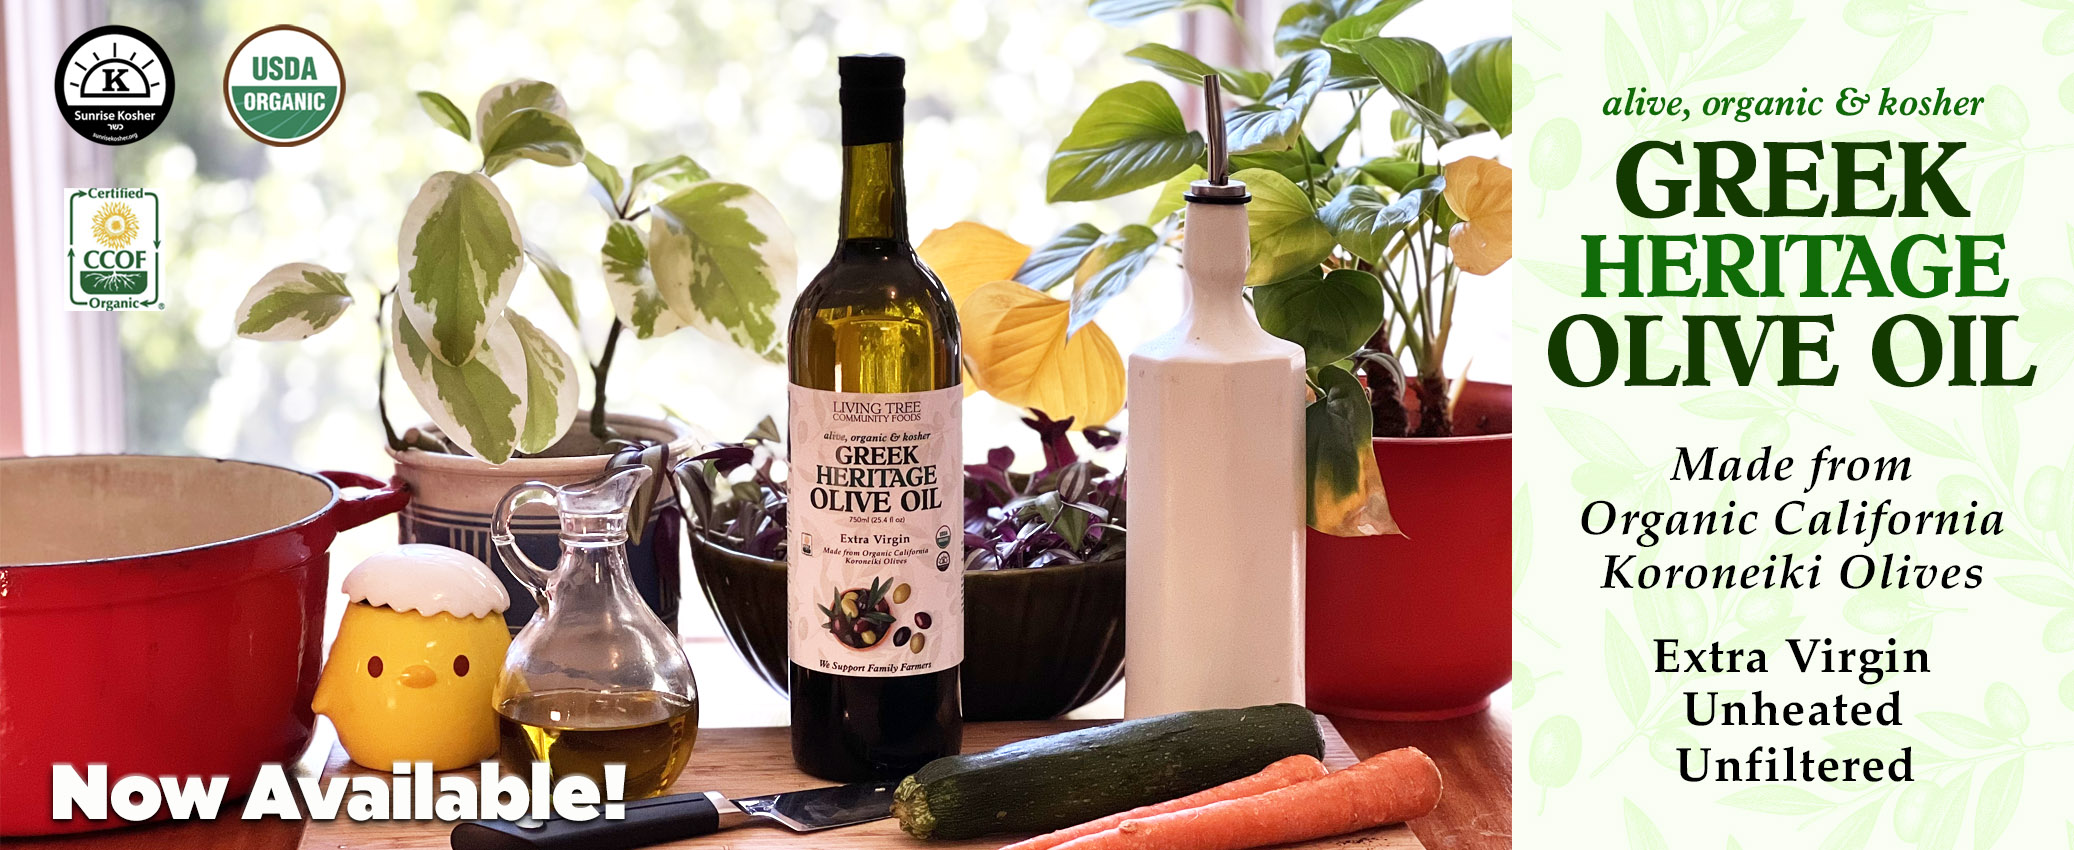 Greek Heritage Olive Oil Homepage Banner